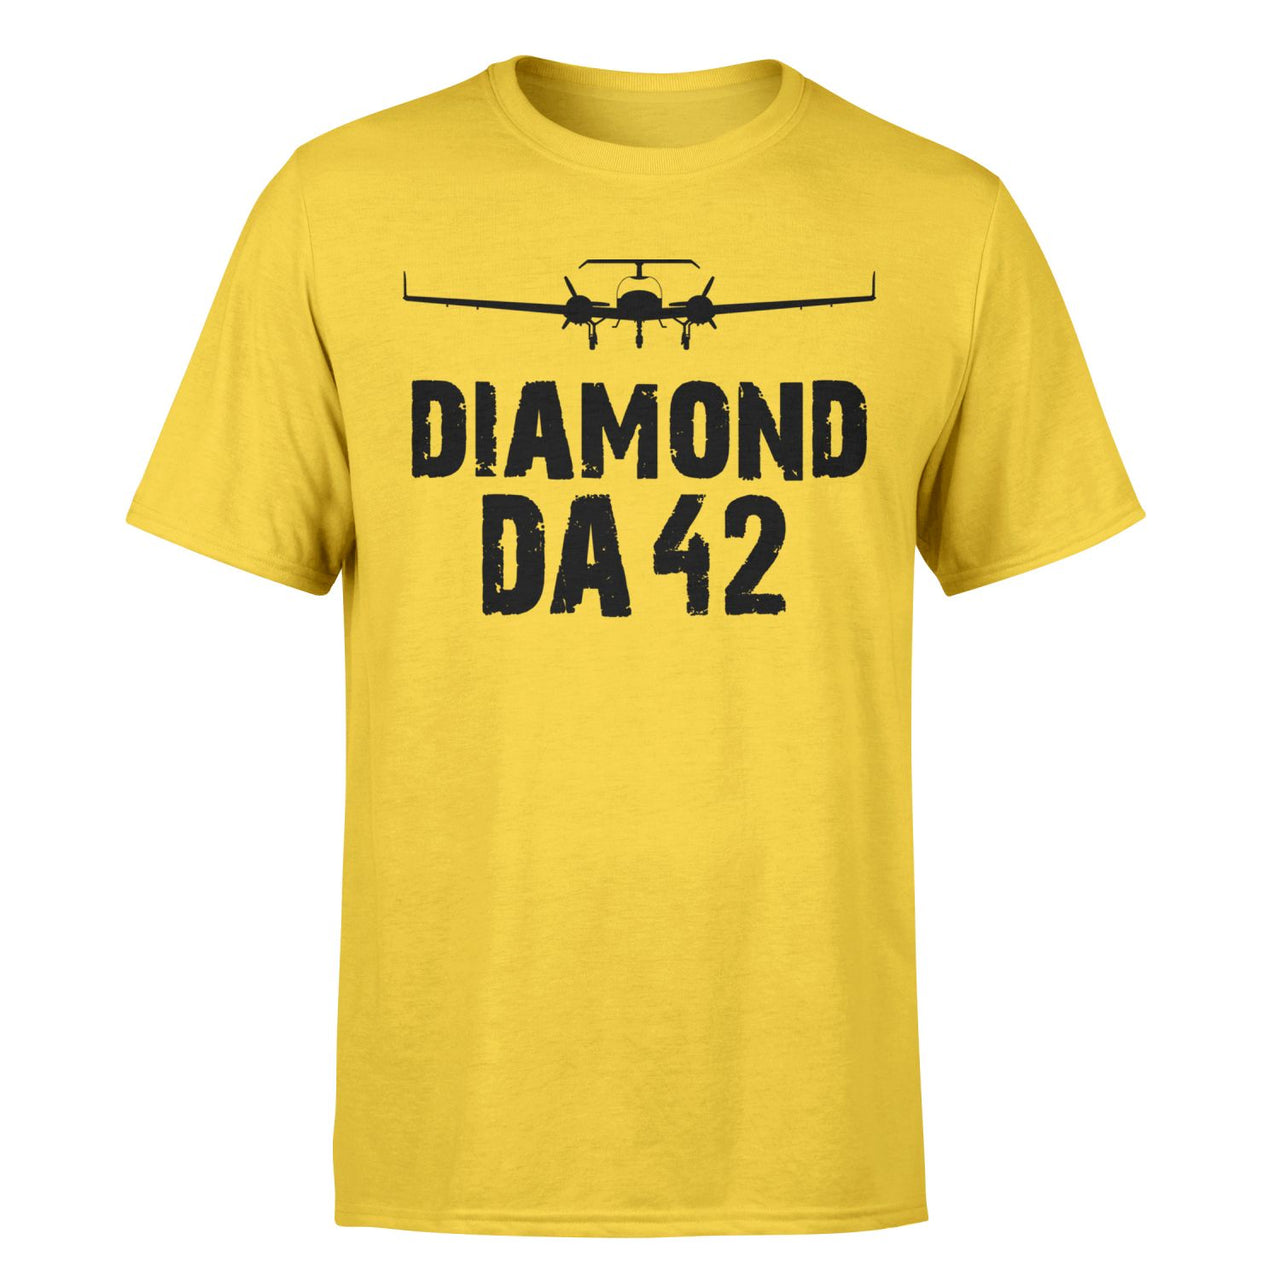 Diamond DA42 & Plane Designed T-Shirts